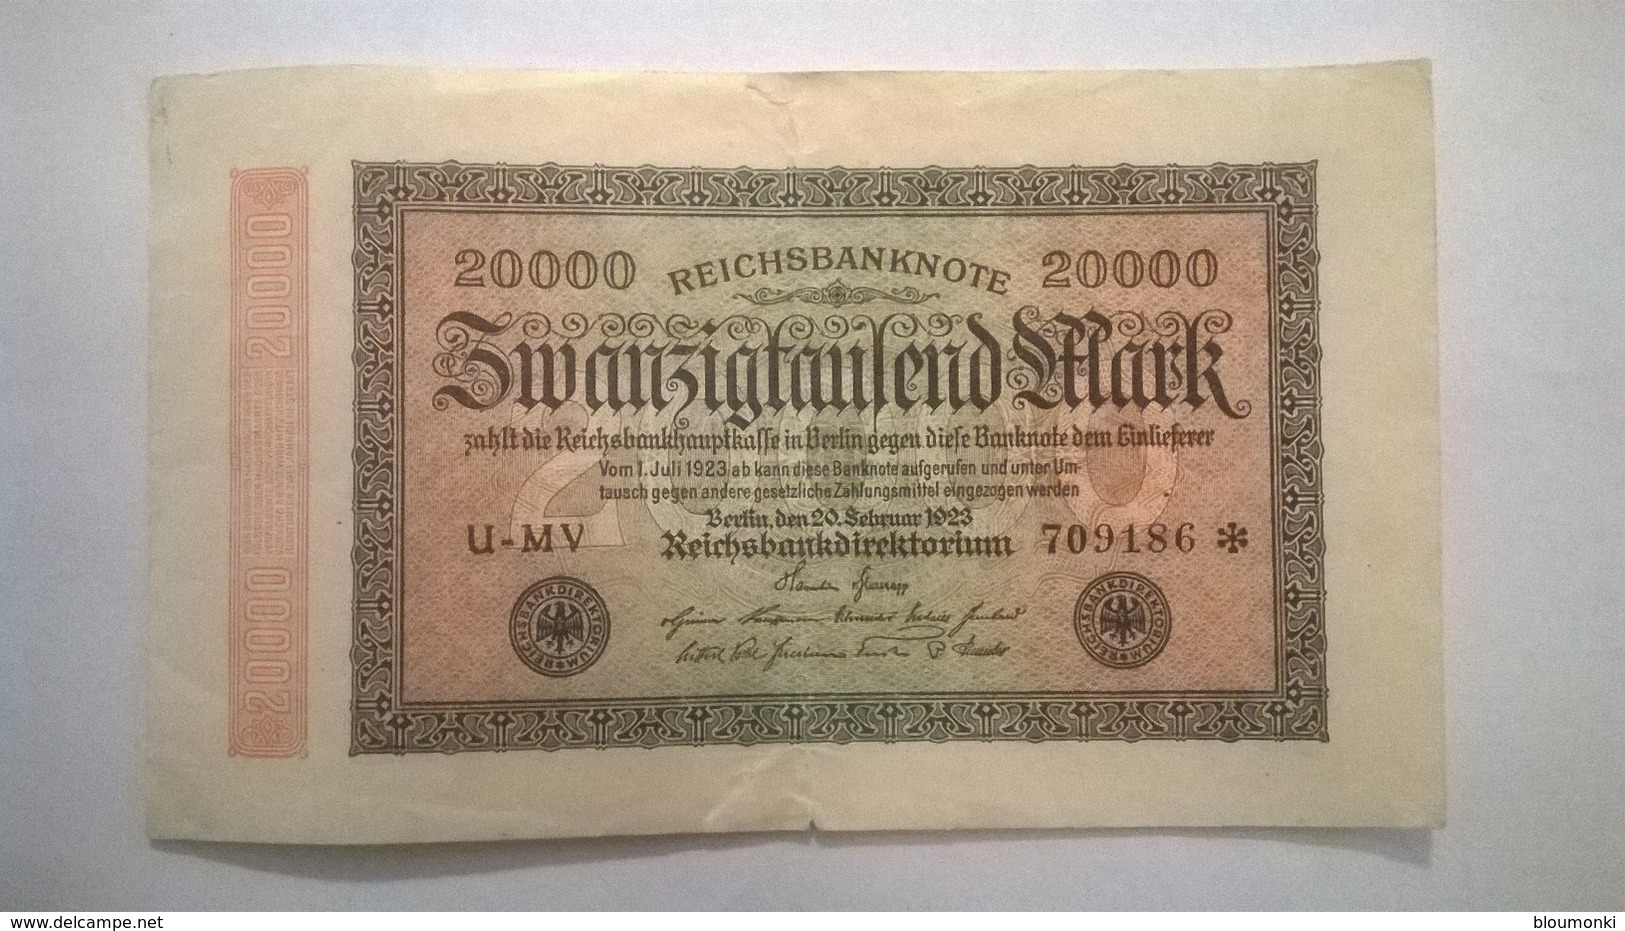 lot de 10  billets de banque ALLEMAGNE  Marks / reichsbanknote